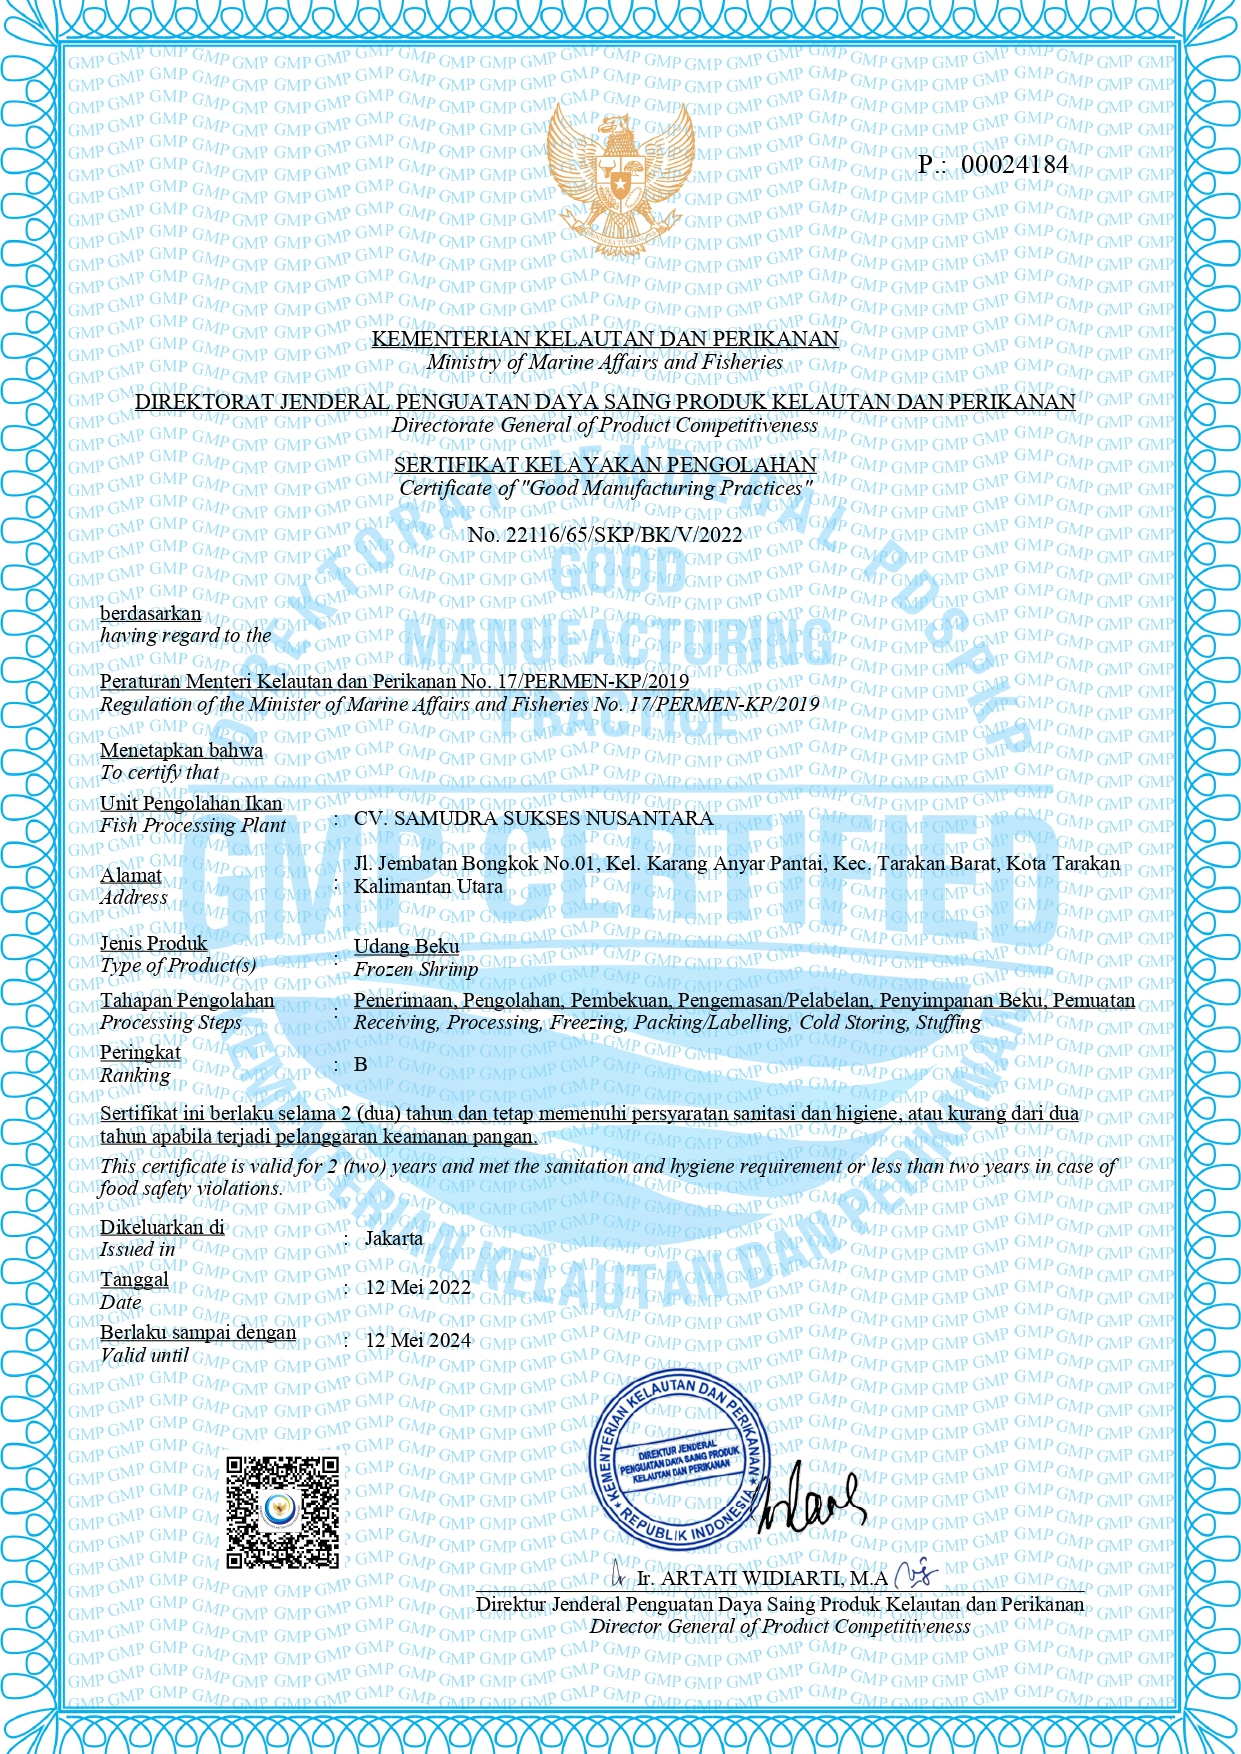 Certificate of "Good Manufacturing Practices" Shrimp Frozen